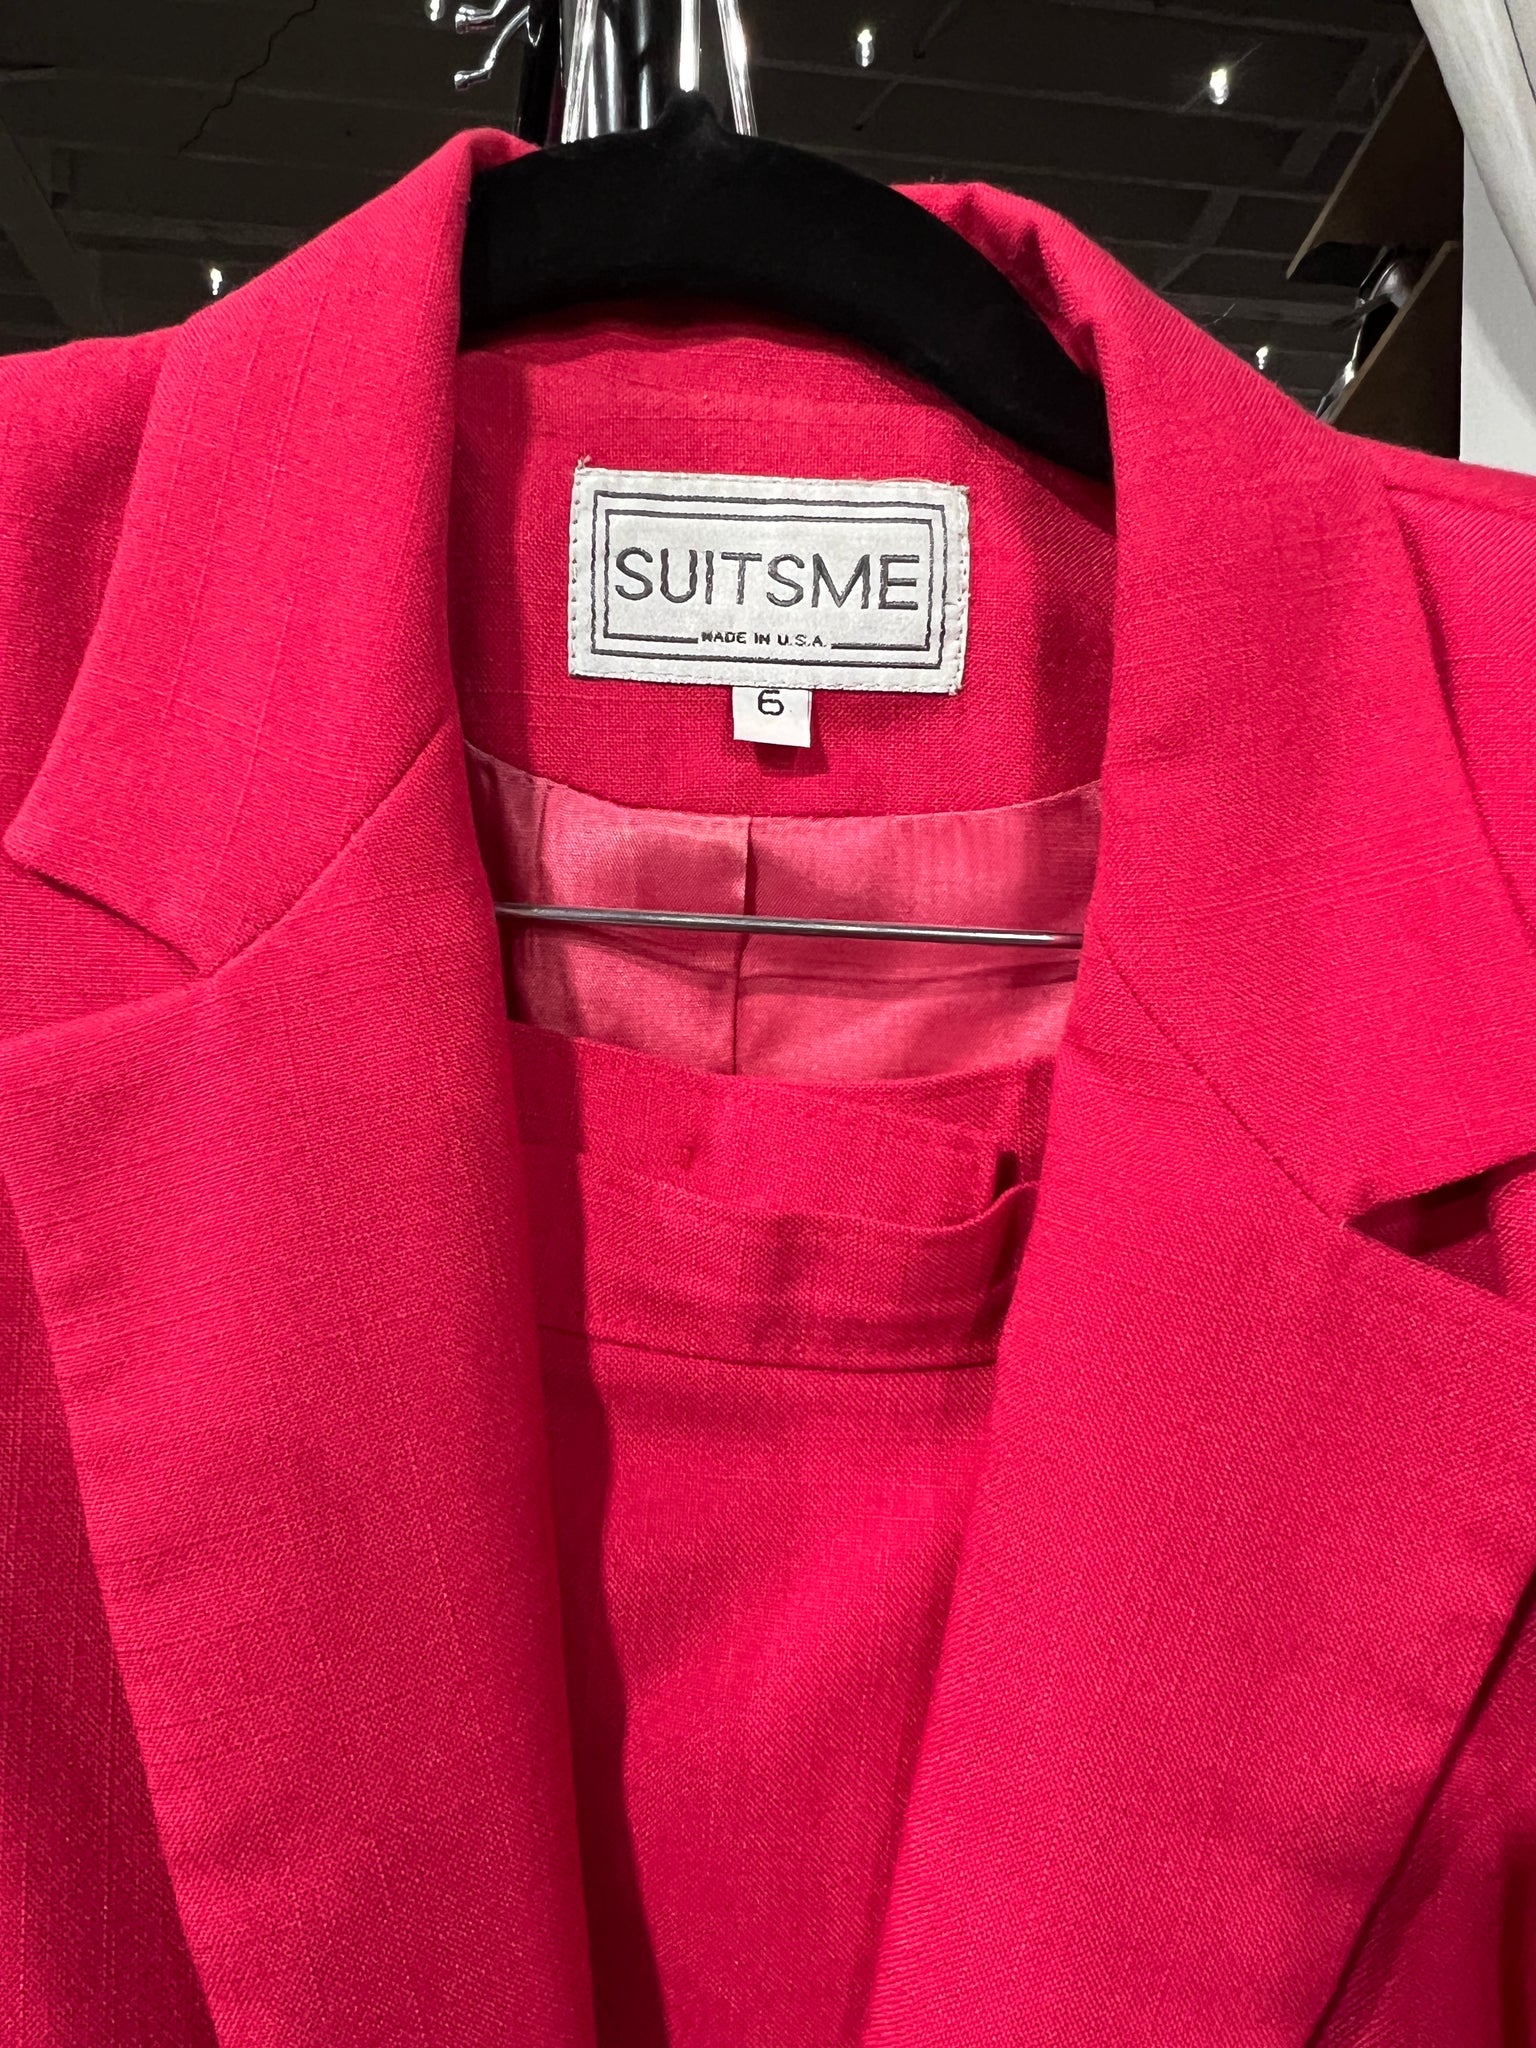 1990's 2 PIECE-SKIRT SUIT-Suits Me hot pink short sleeve